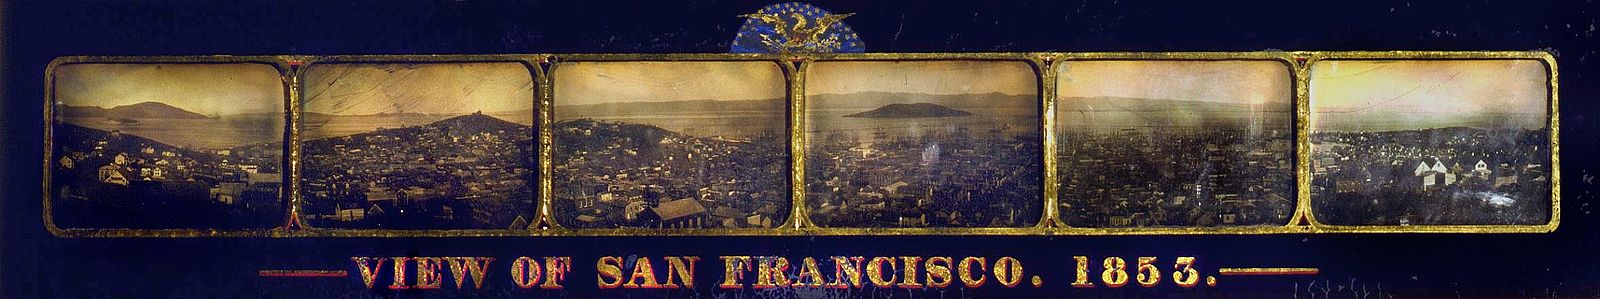 Six daguerreotypes show a panorama of San Francisco, California, in 1853.